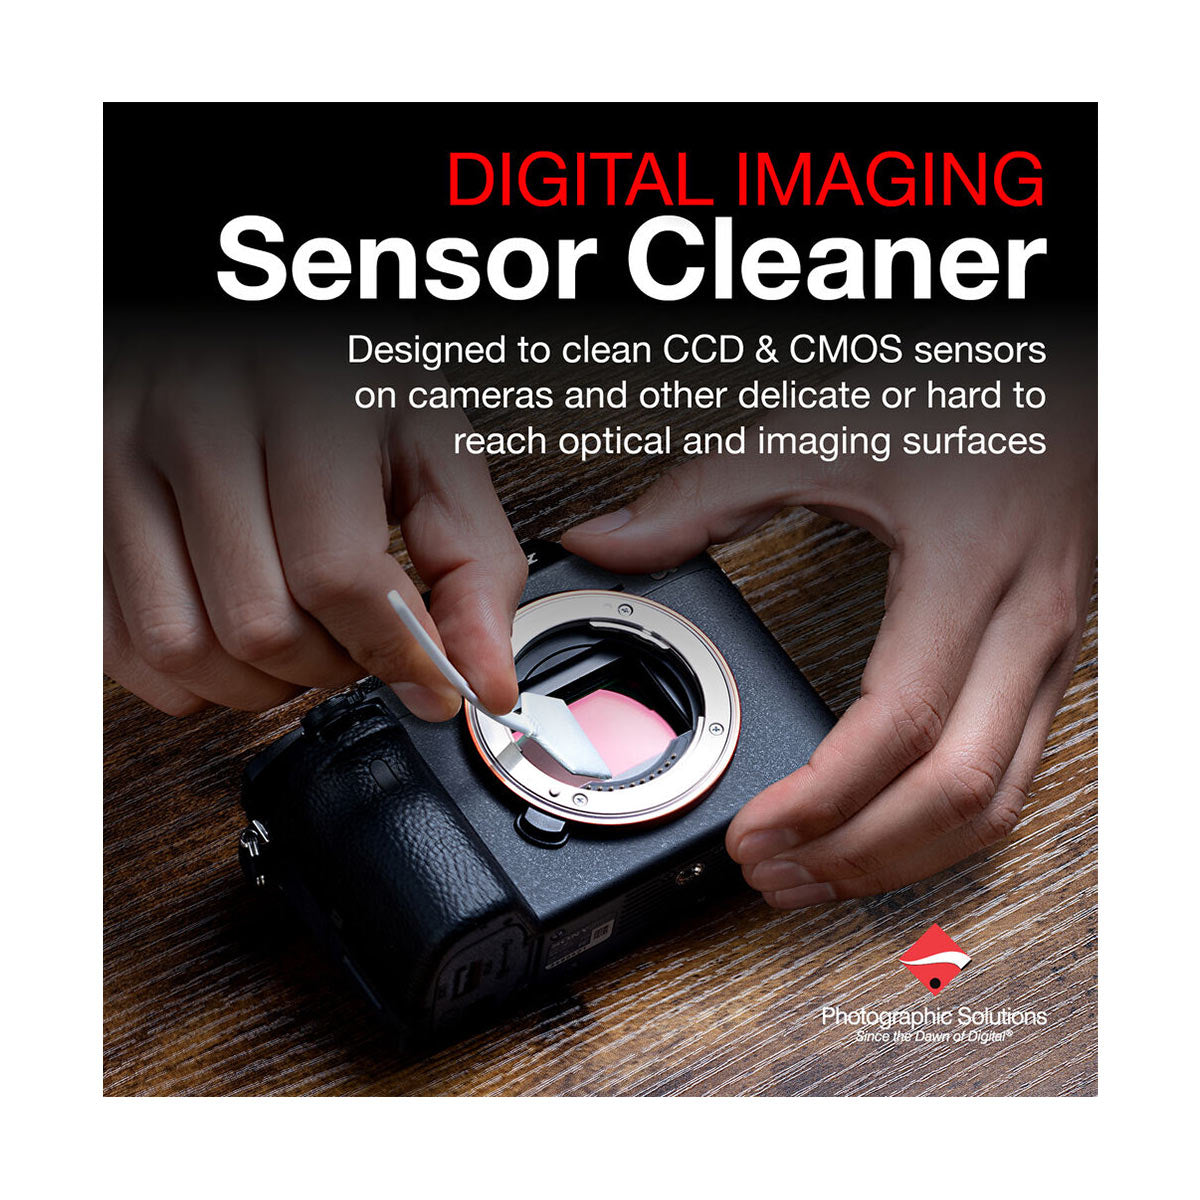 Photographic Solutions Sensor Swab Ultra Type 2 Small (Box of 12)